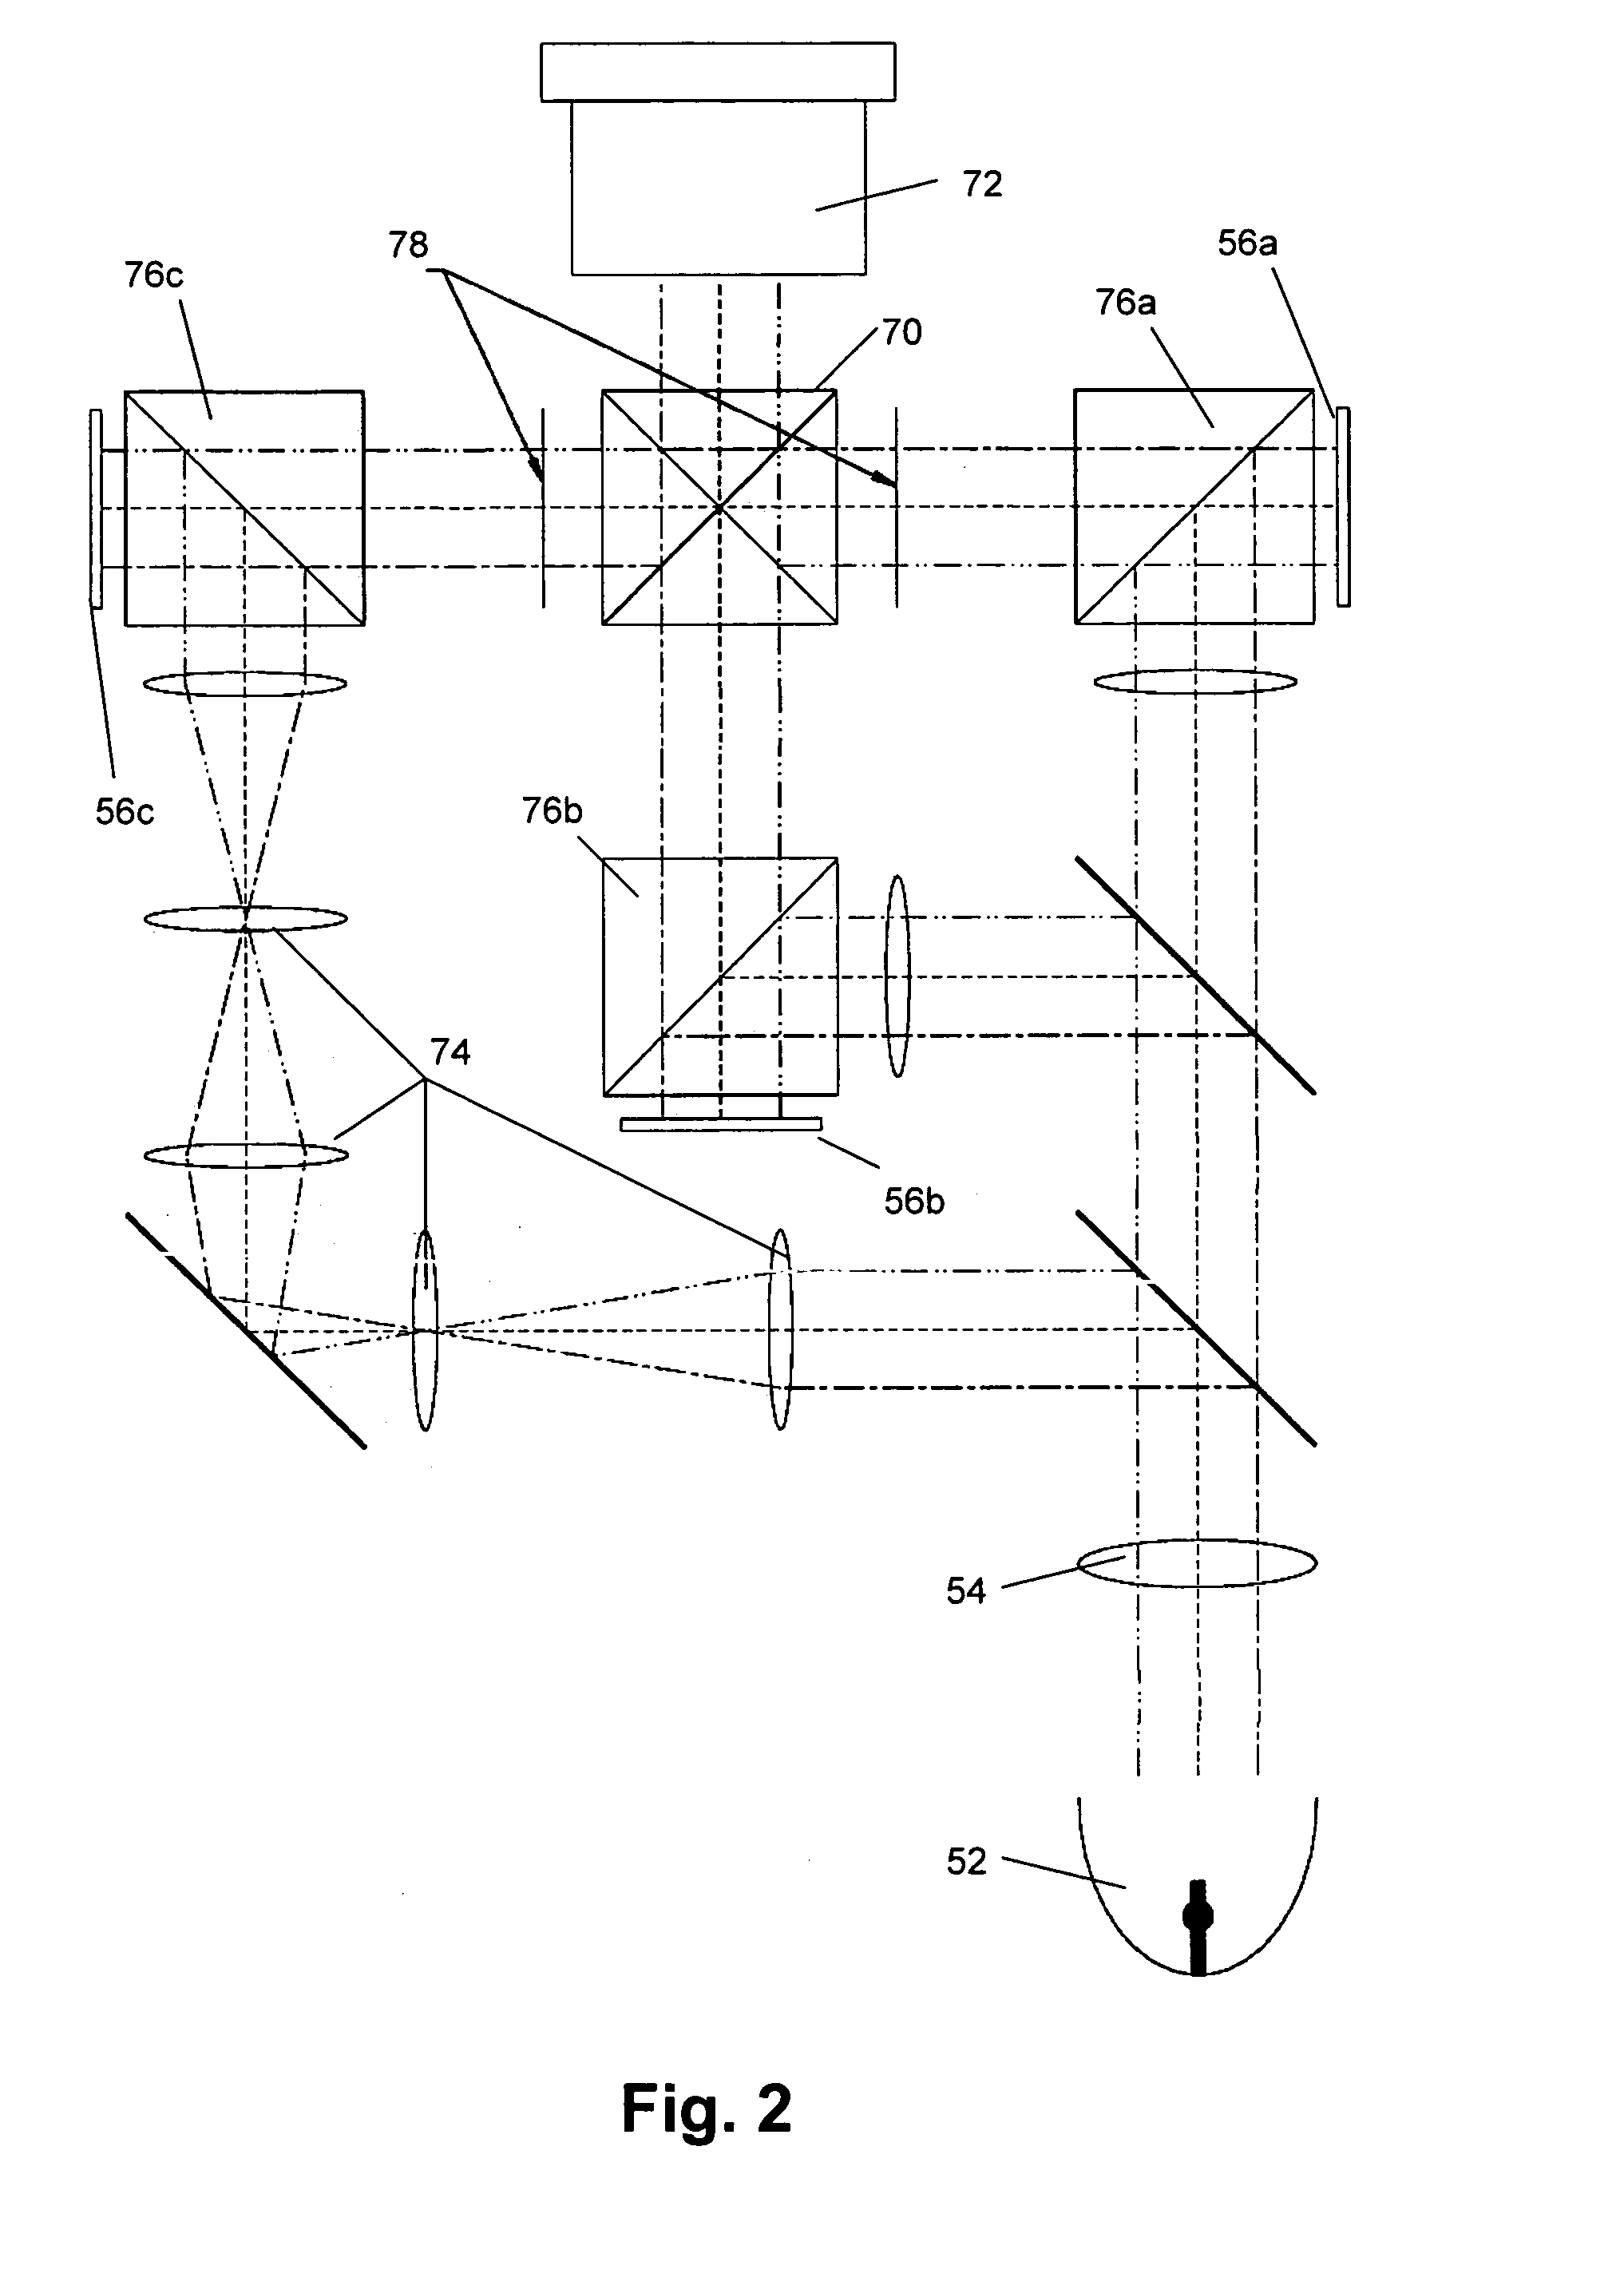 Optical arrangement for non-inverting illumination system